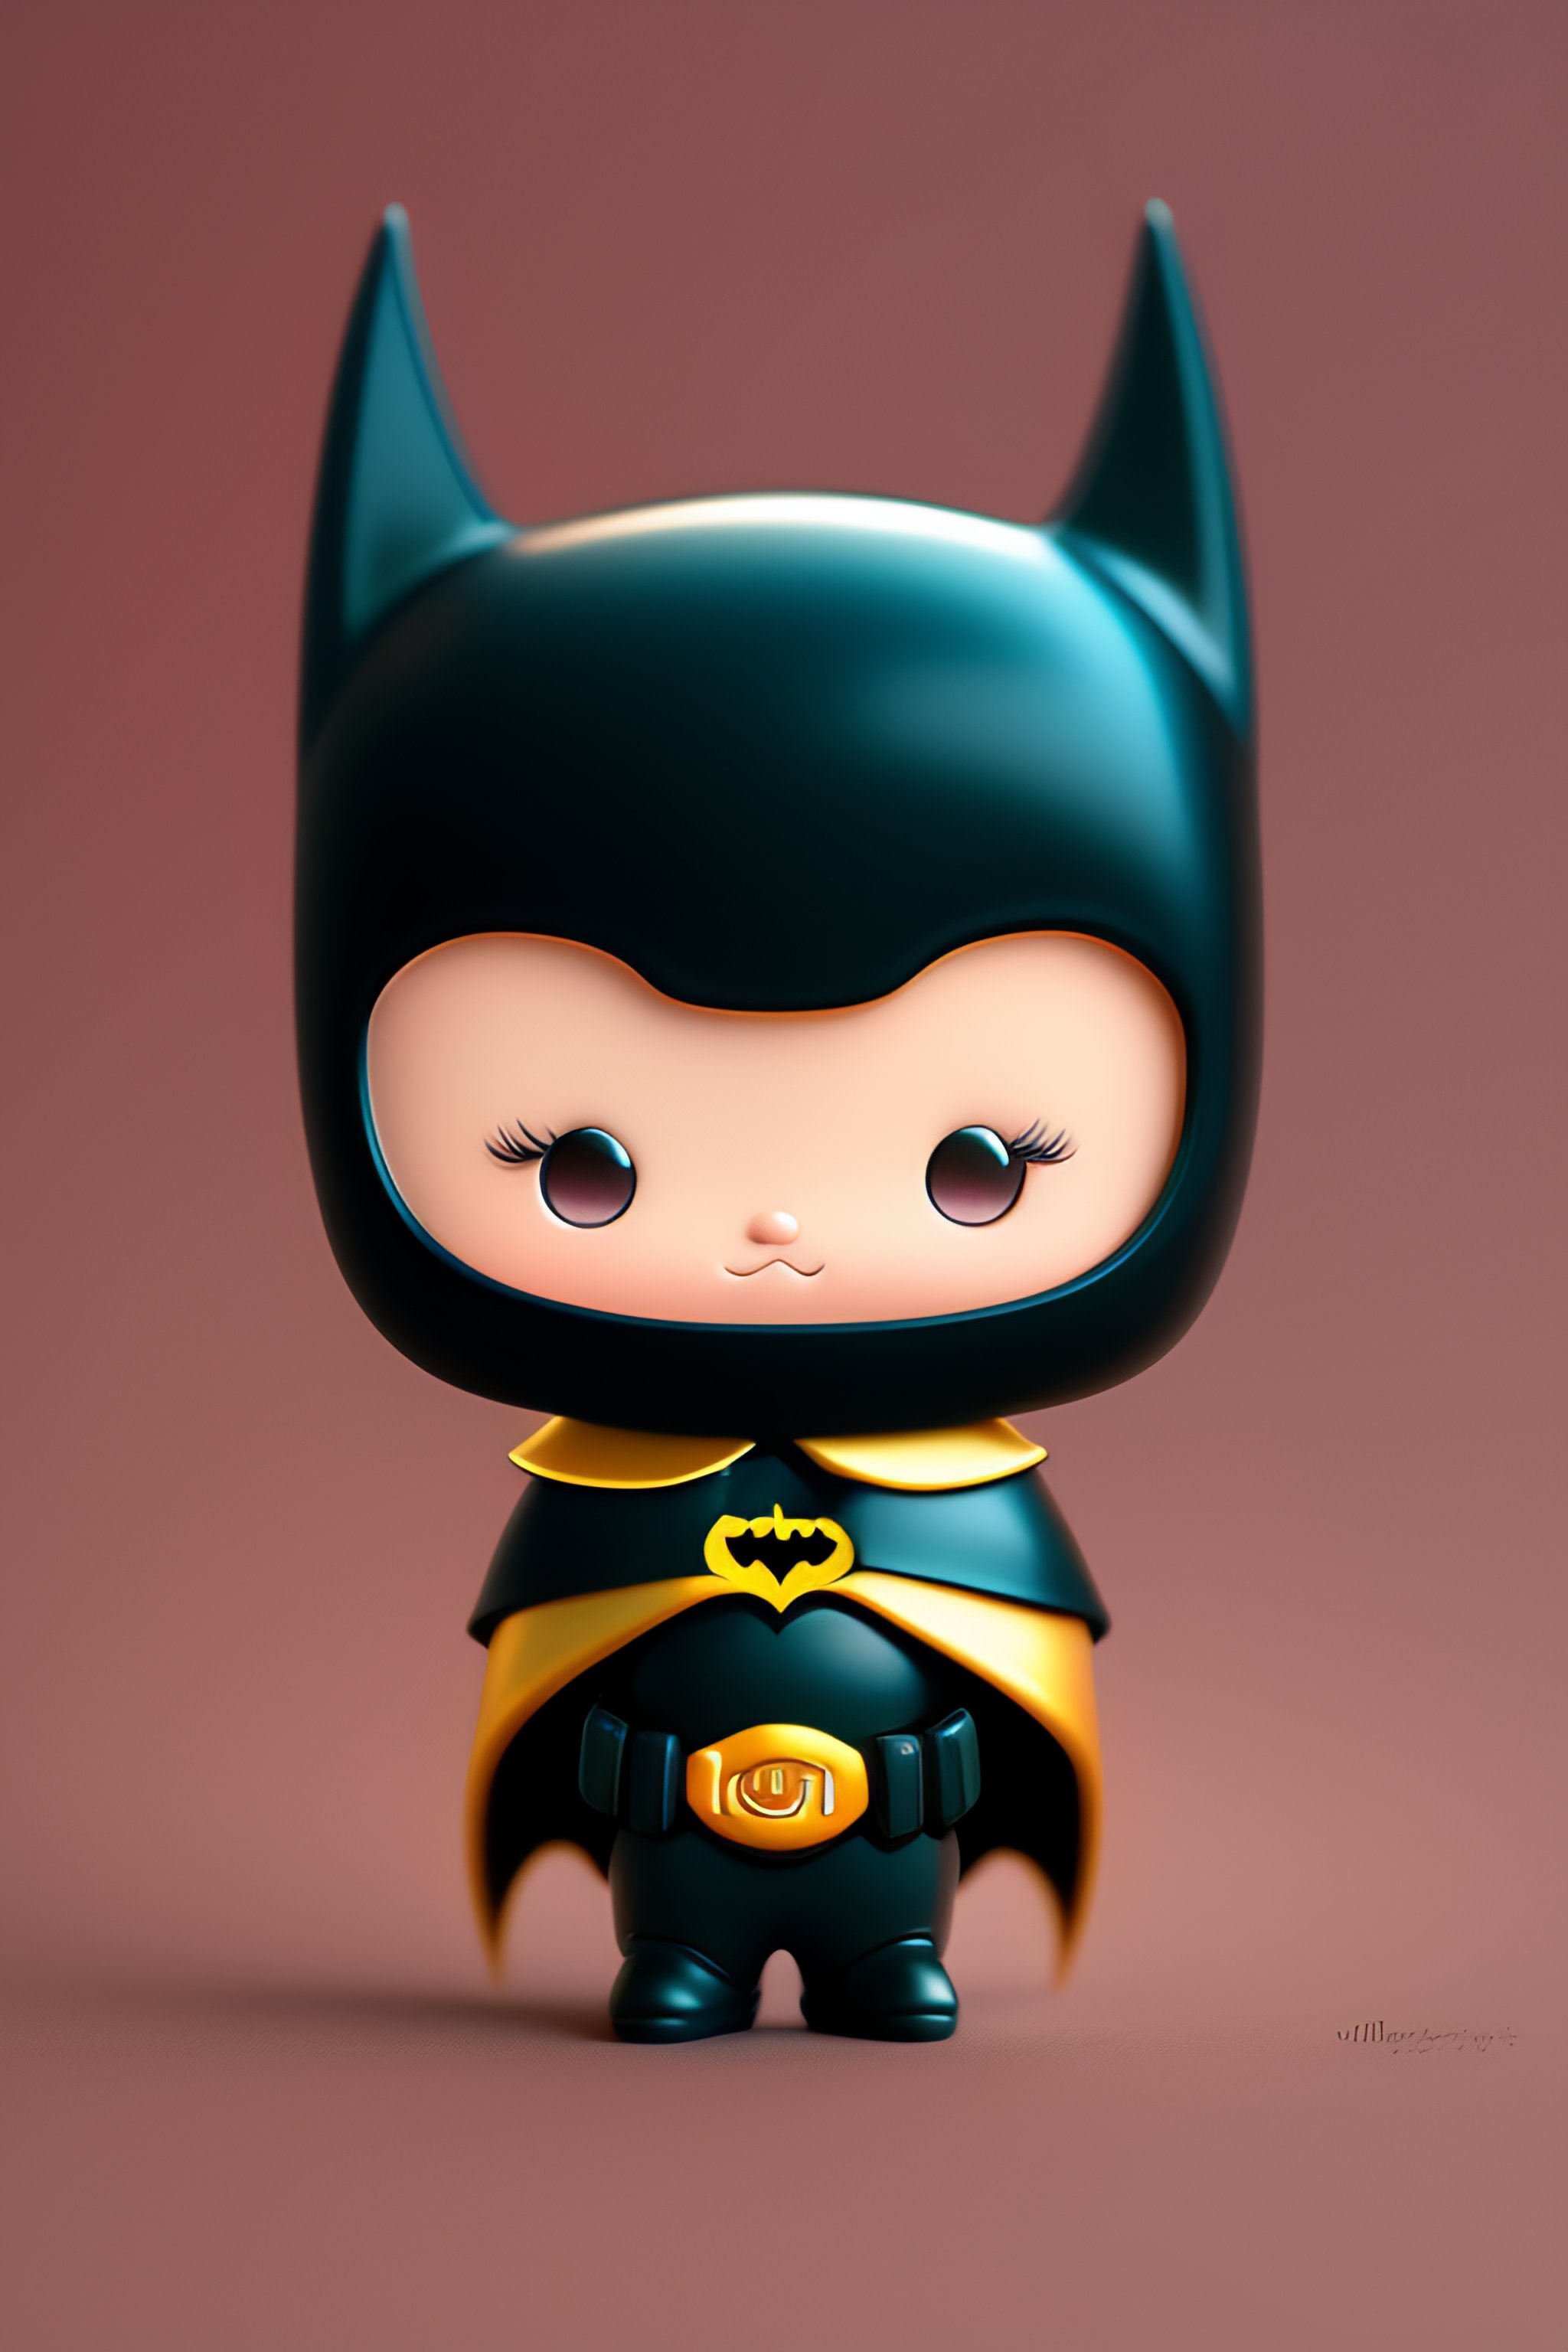 Lexica - Cute and adorable cartoon batman baby, fantasy, dreamlike,  surrealism, super cute, trending on artstation